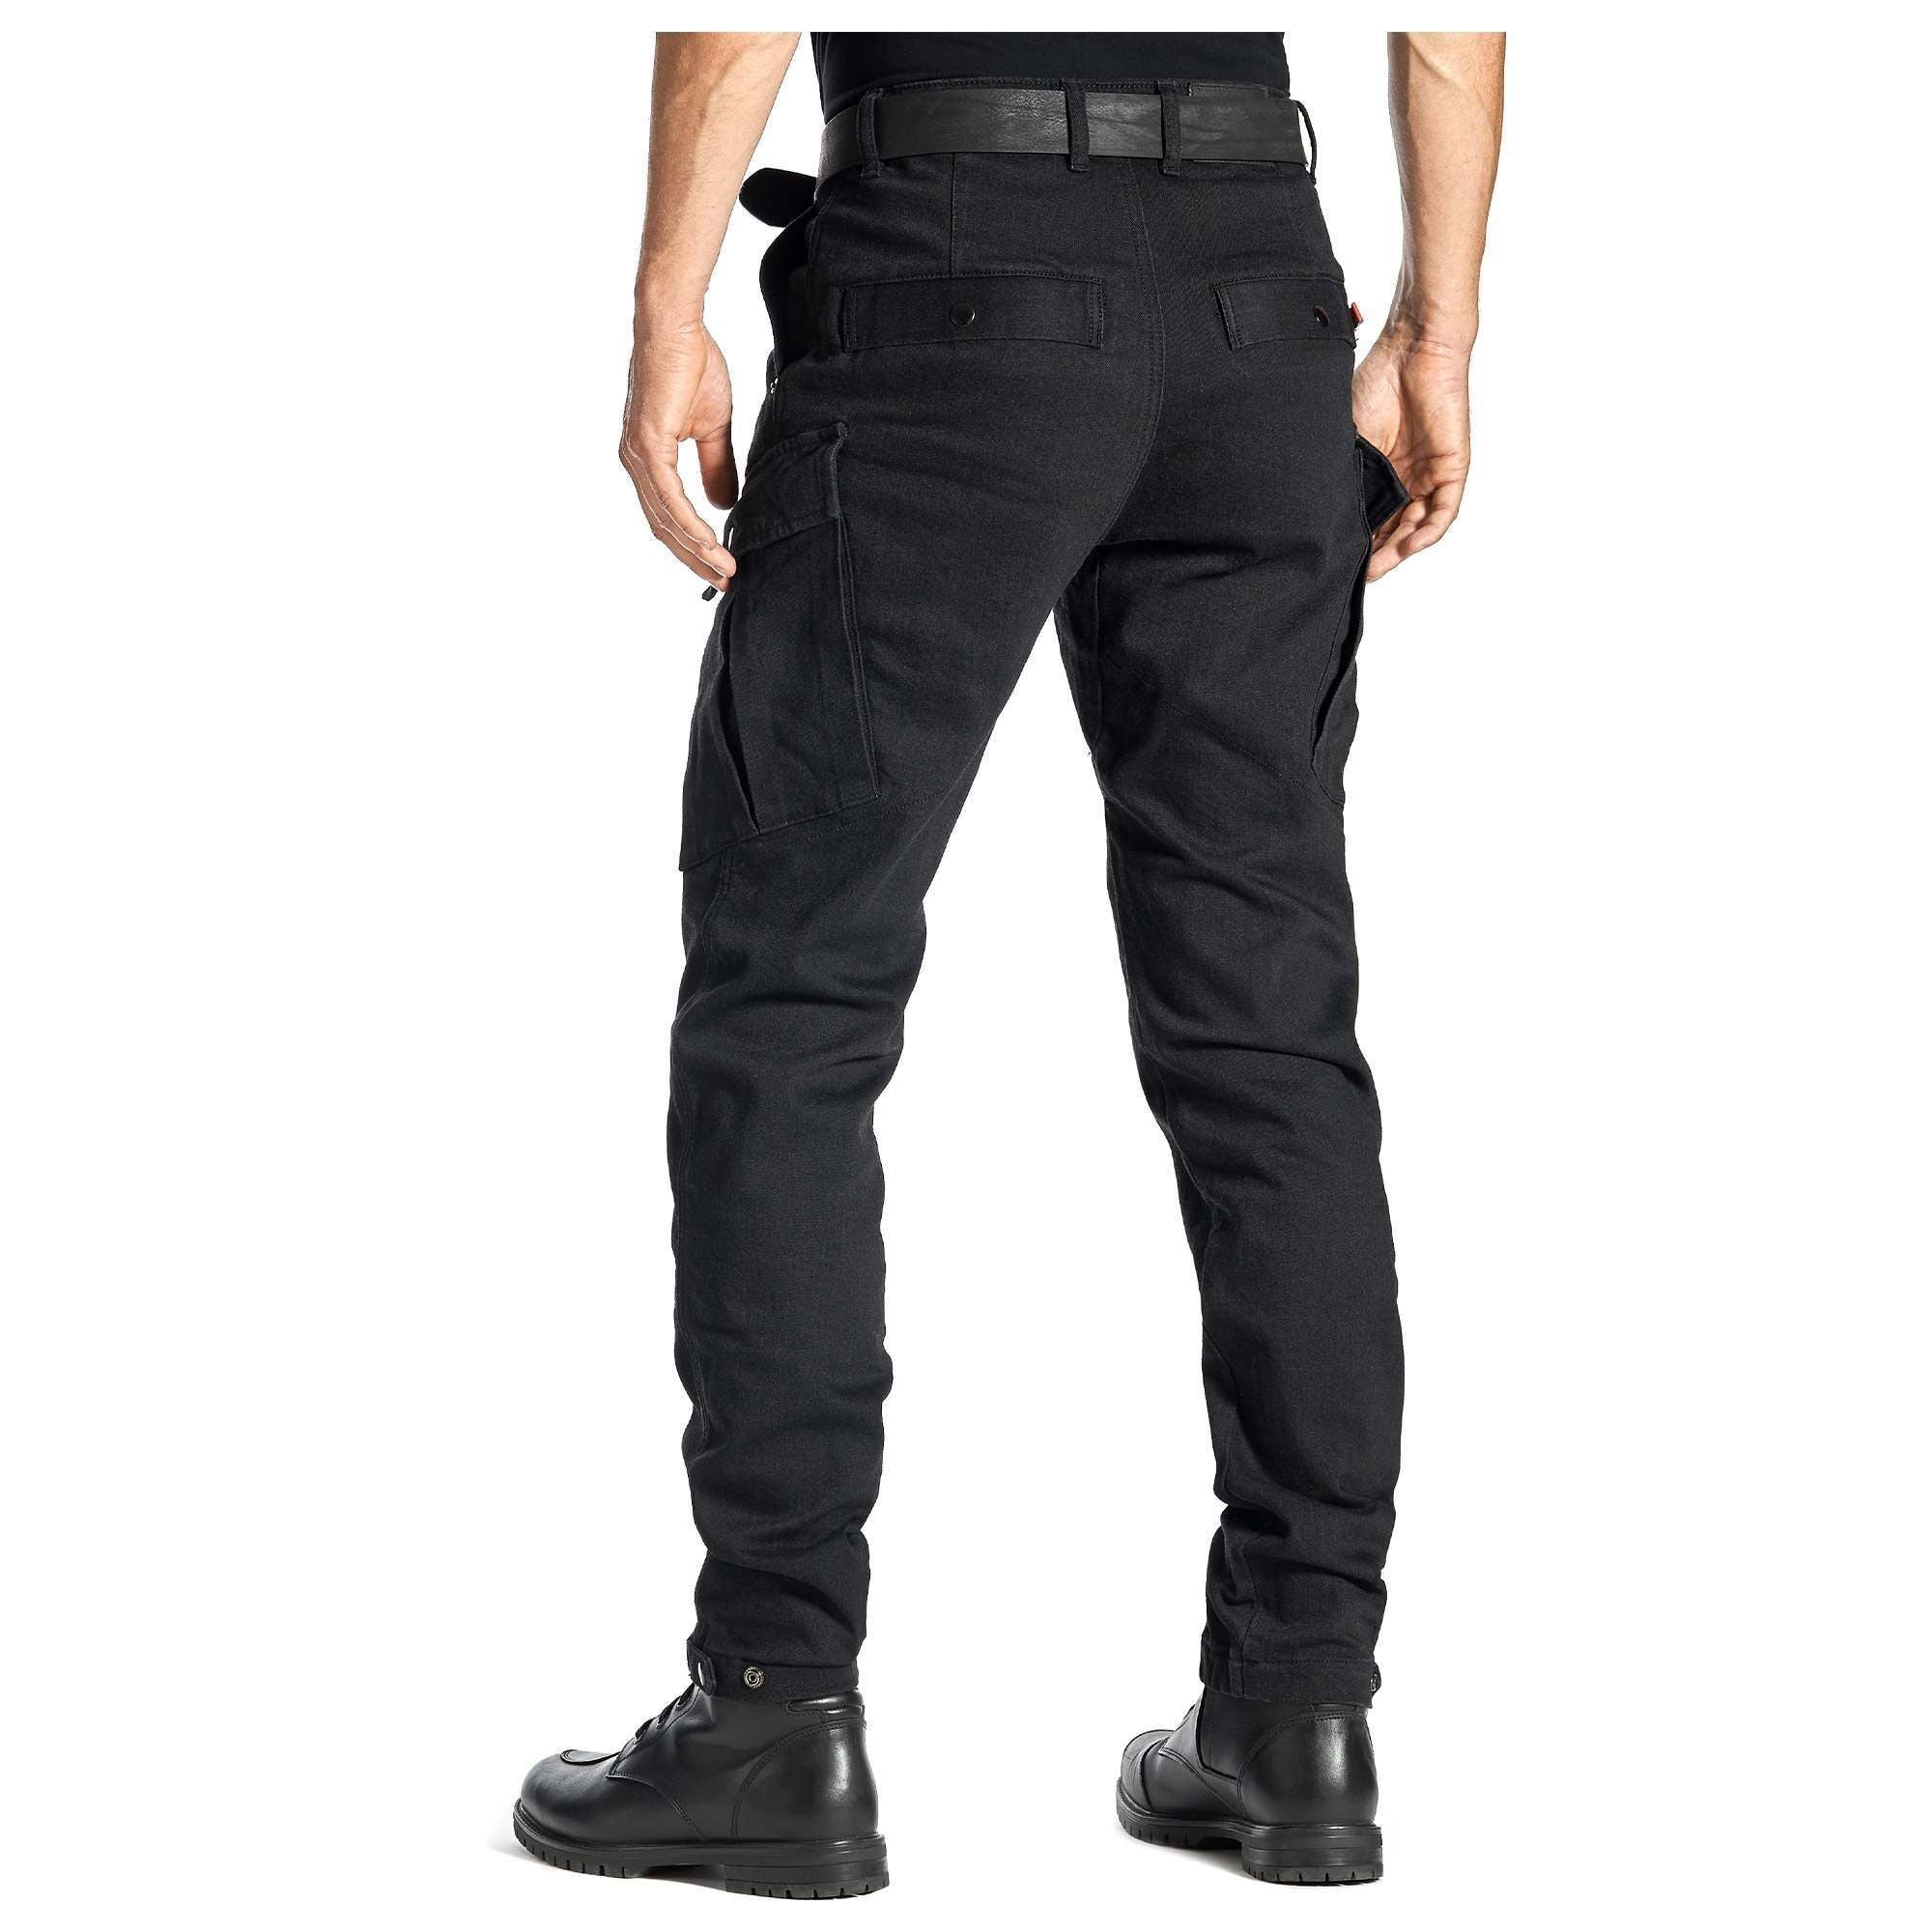 Pando Moto Mark Kev 01 Jeans, Length 30 - Black